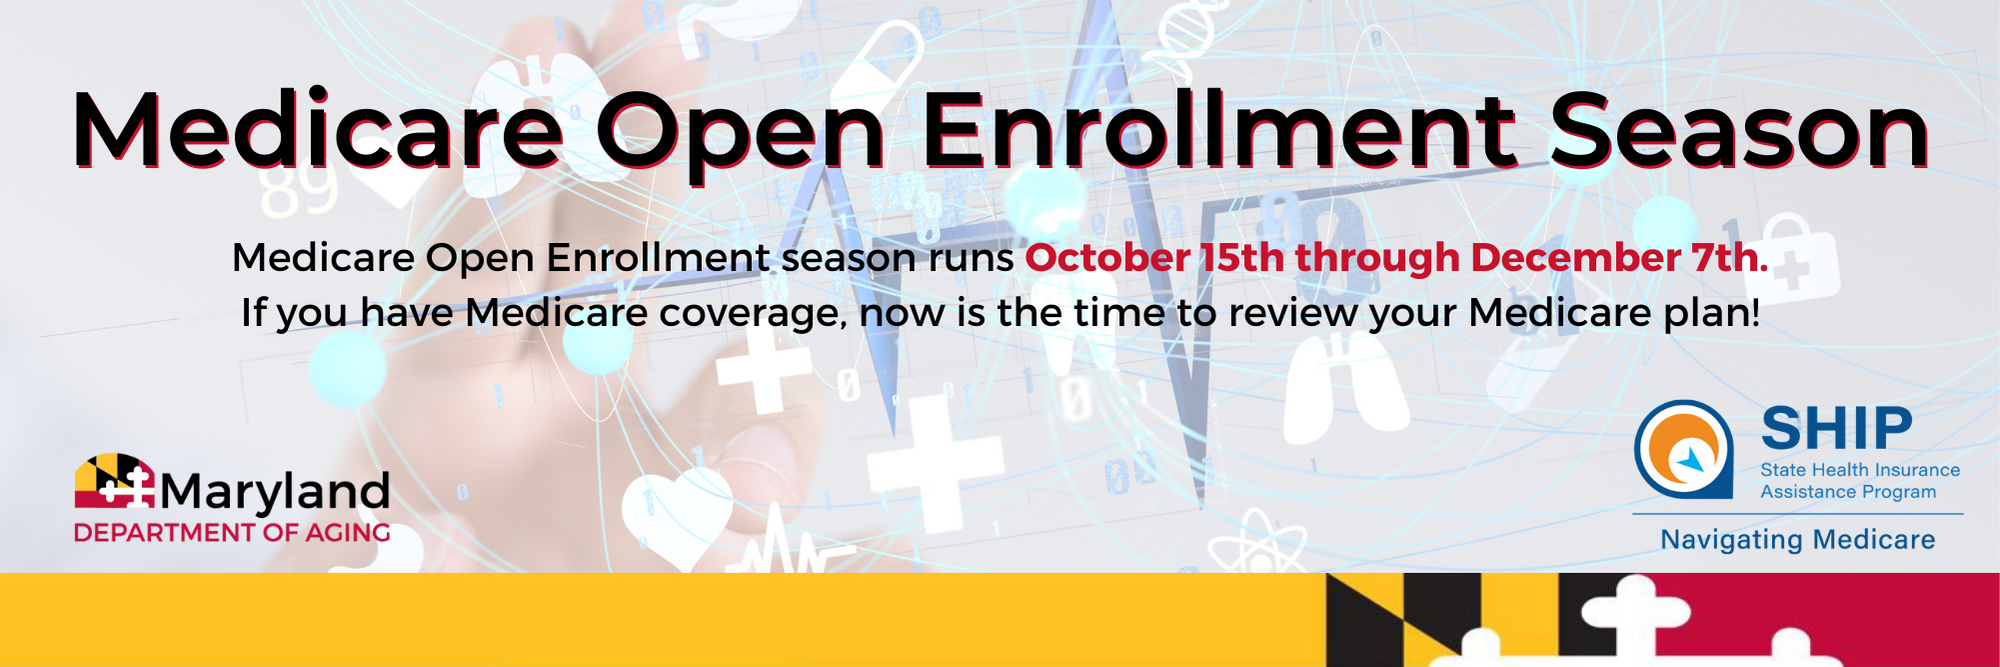 Medicare Open Enrollment Season.png